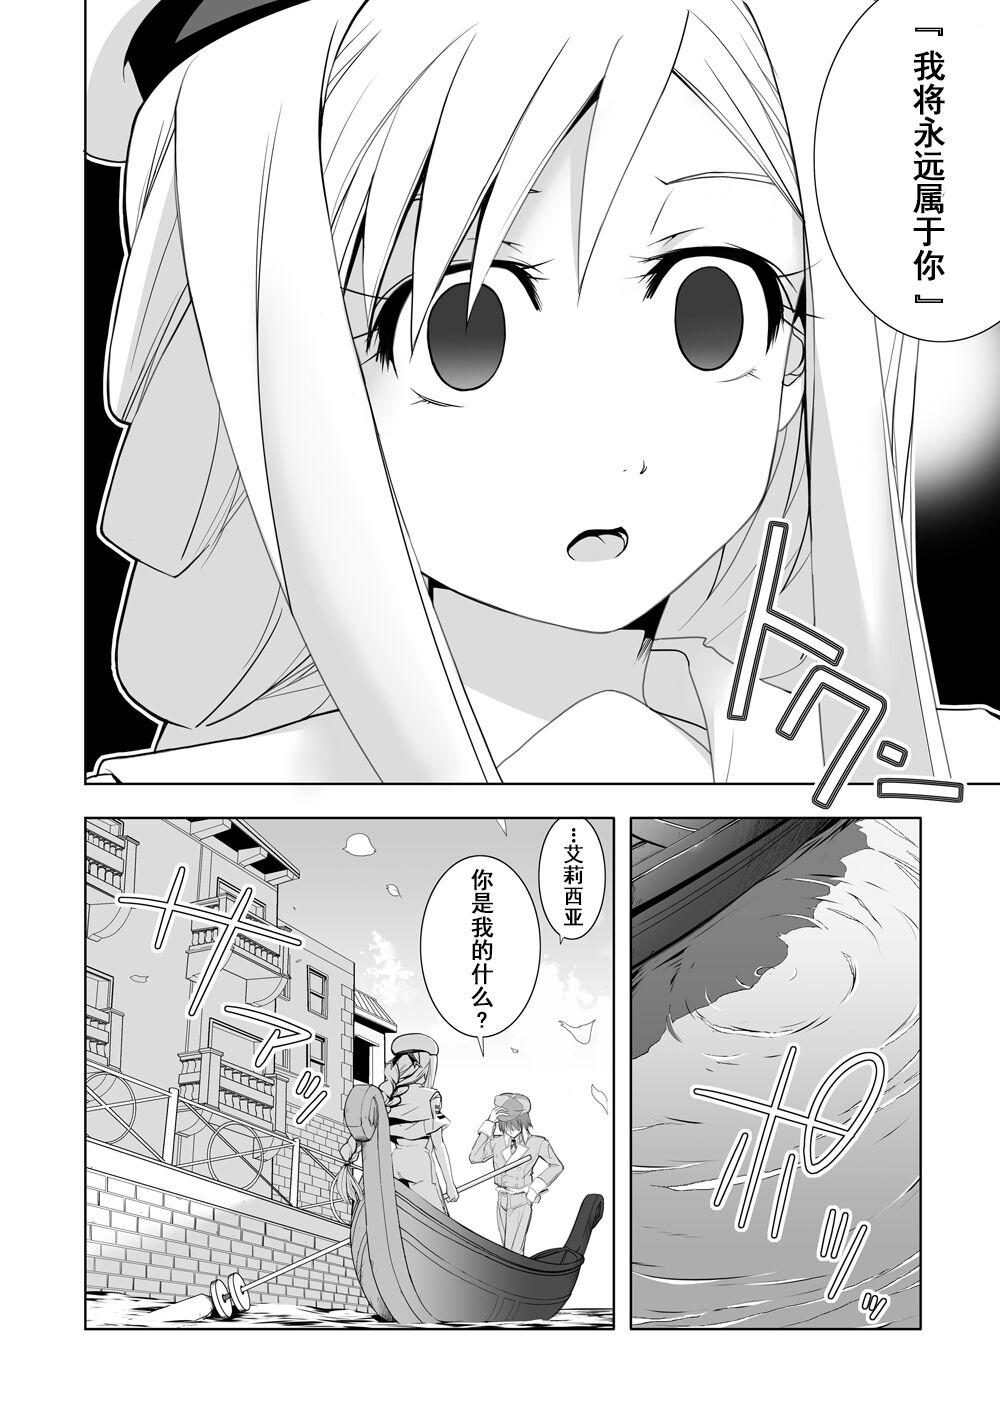 Weird AR*A Mind-control Manga - Aria Amigos - Page 2